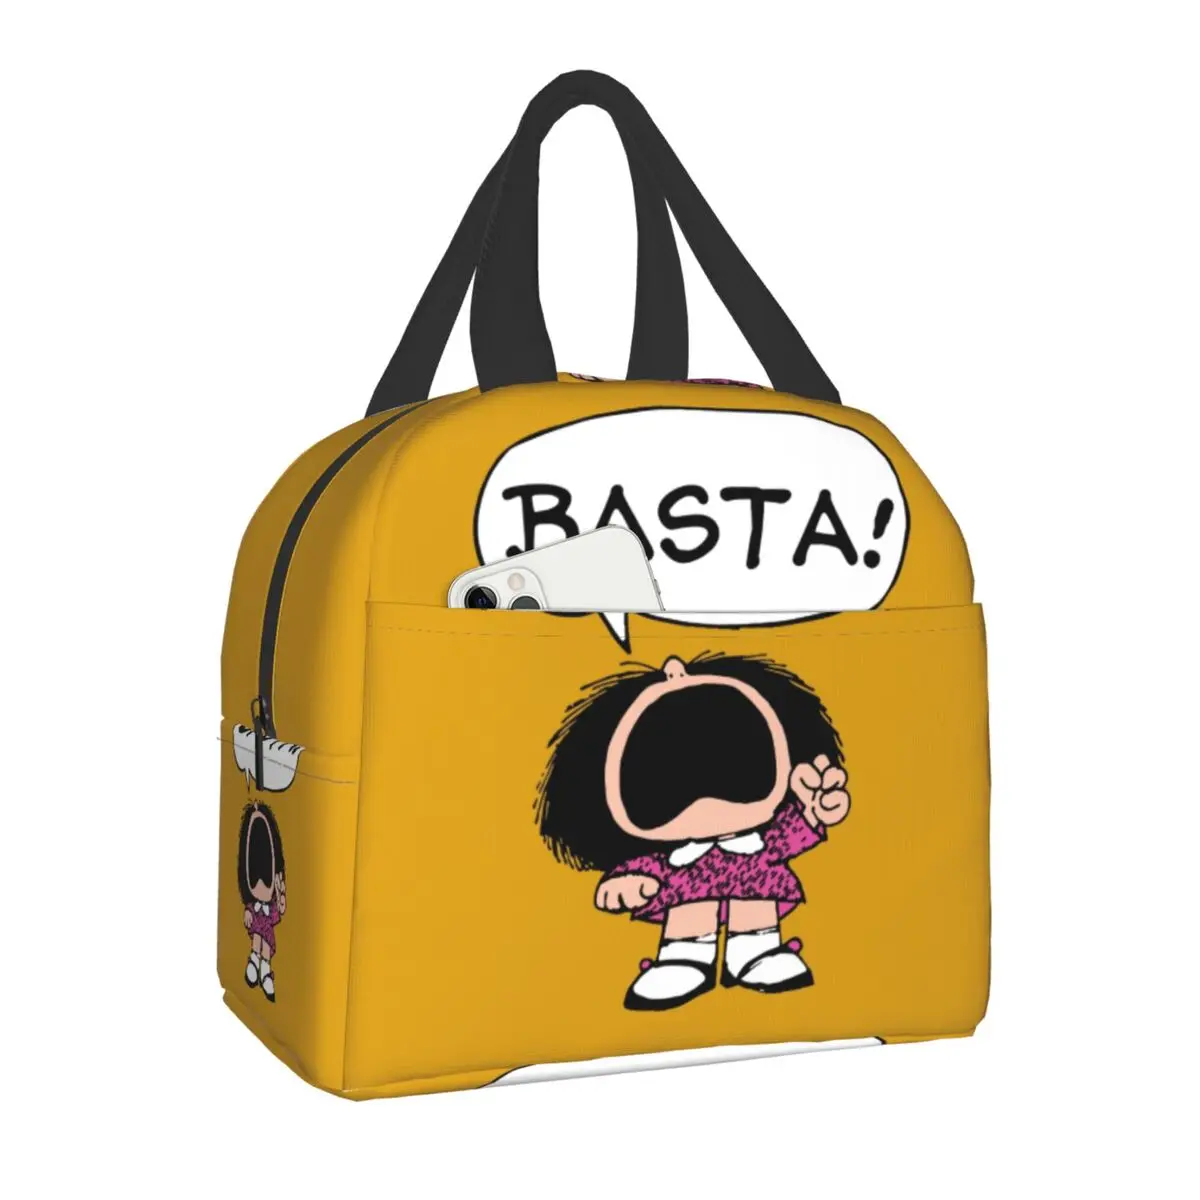 Mafalda Basta Thermal Insulated Lunch Bag Quino Manga Portable Lunch Box Tote for Women Kids Camping Travel Food Storage Bag